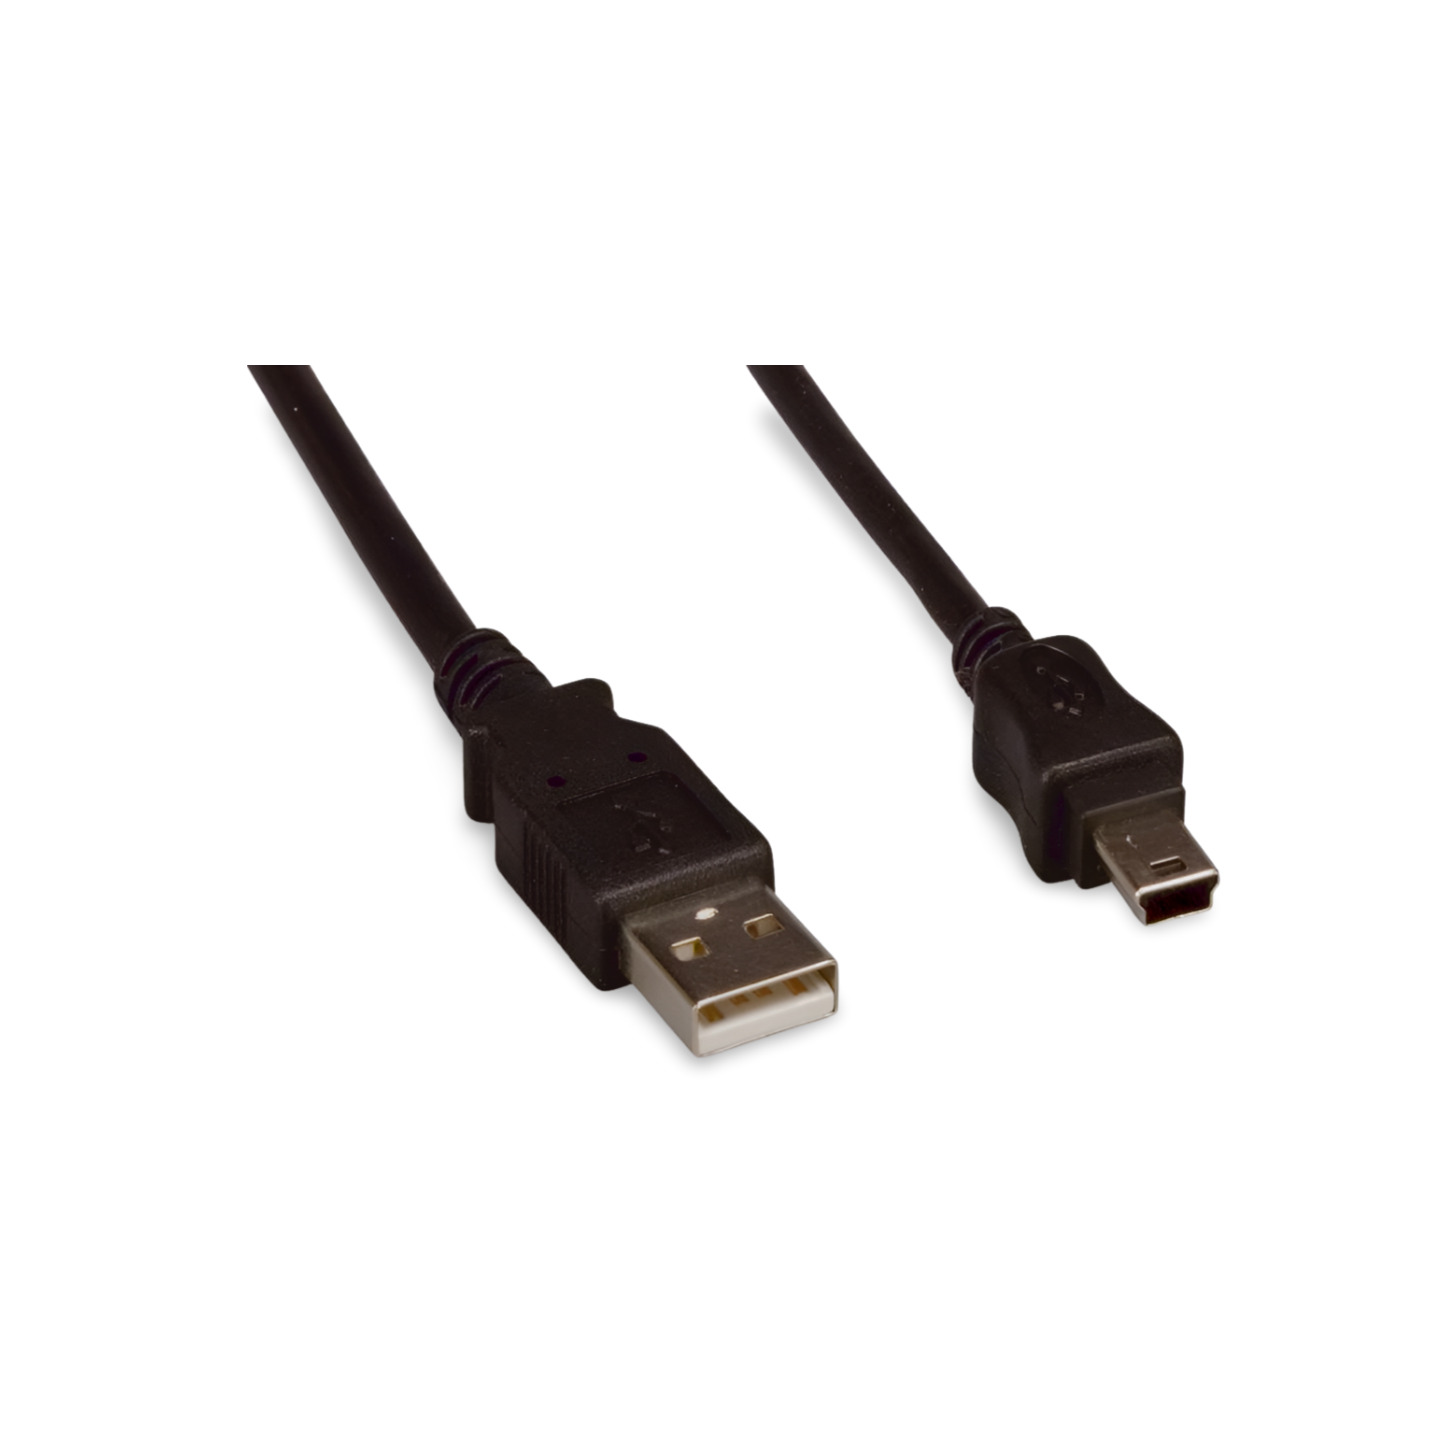 1ft USB Type A to Mini B 5 Pin Cable - Black